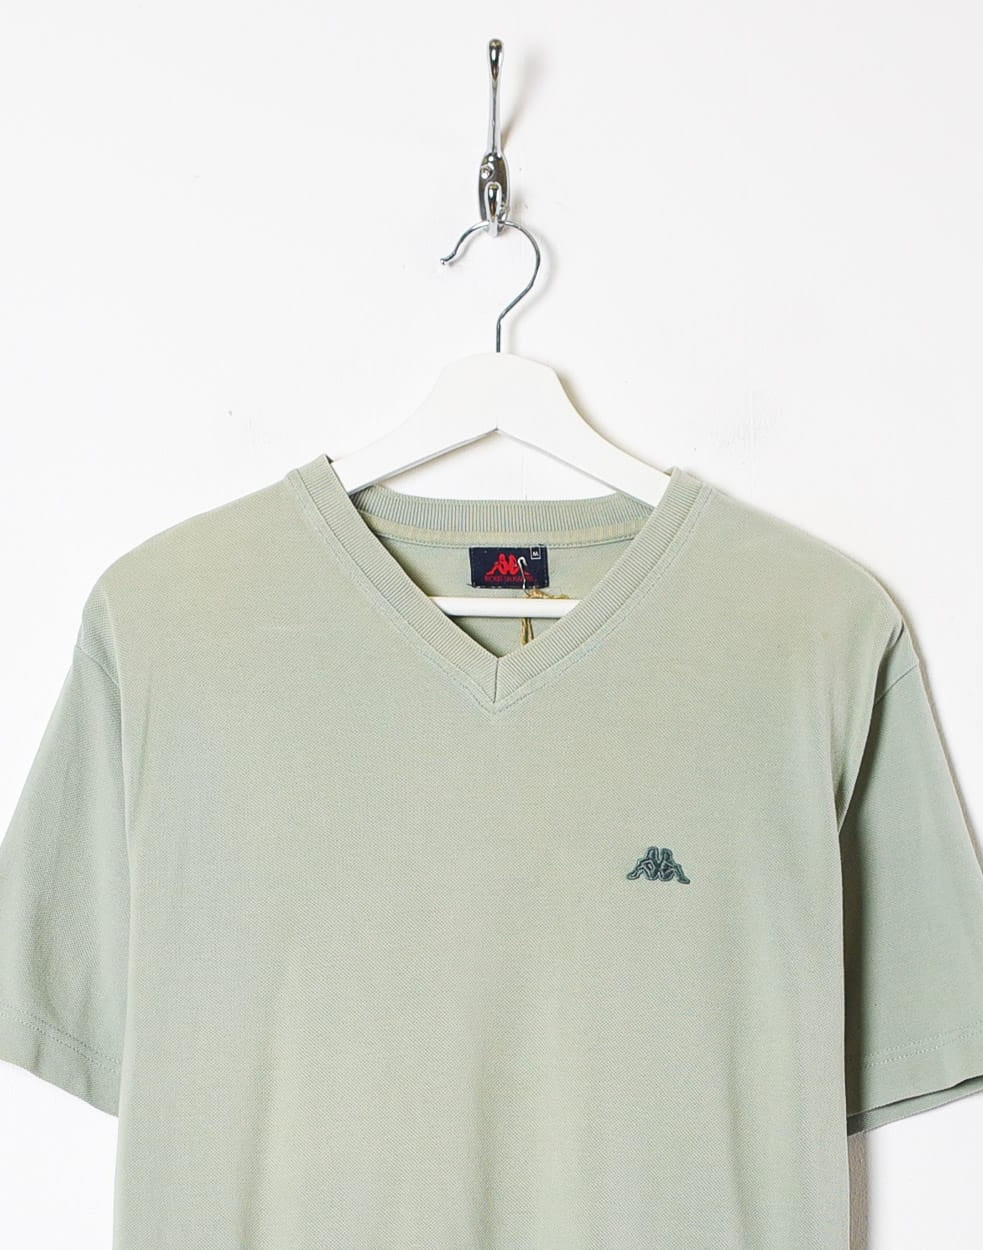 Green Kappa T-Shirt - Medium